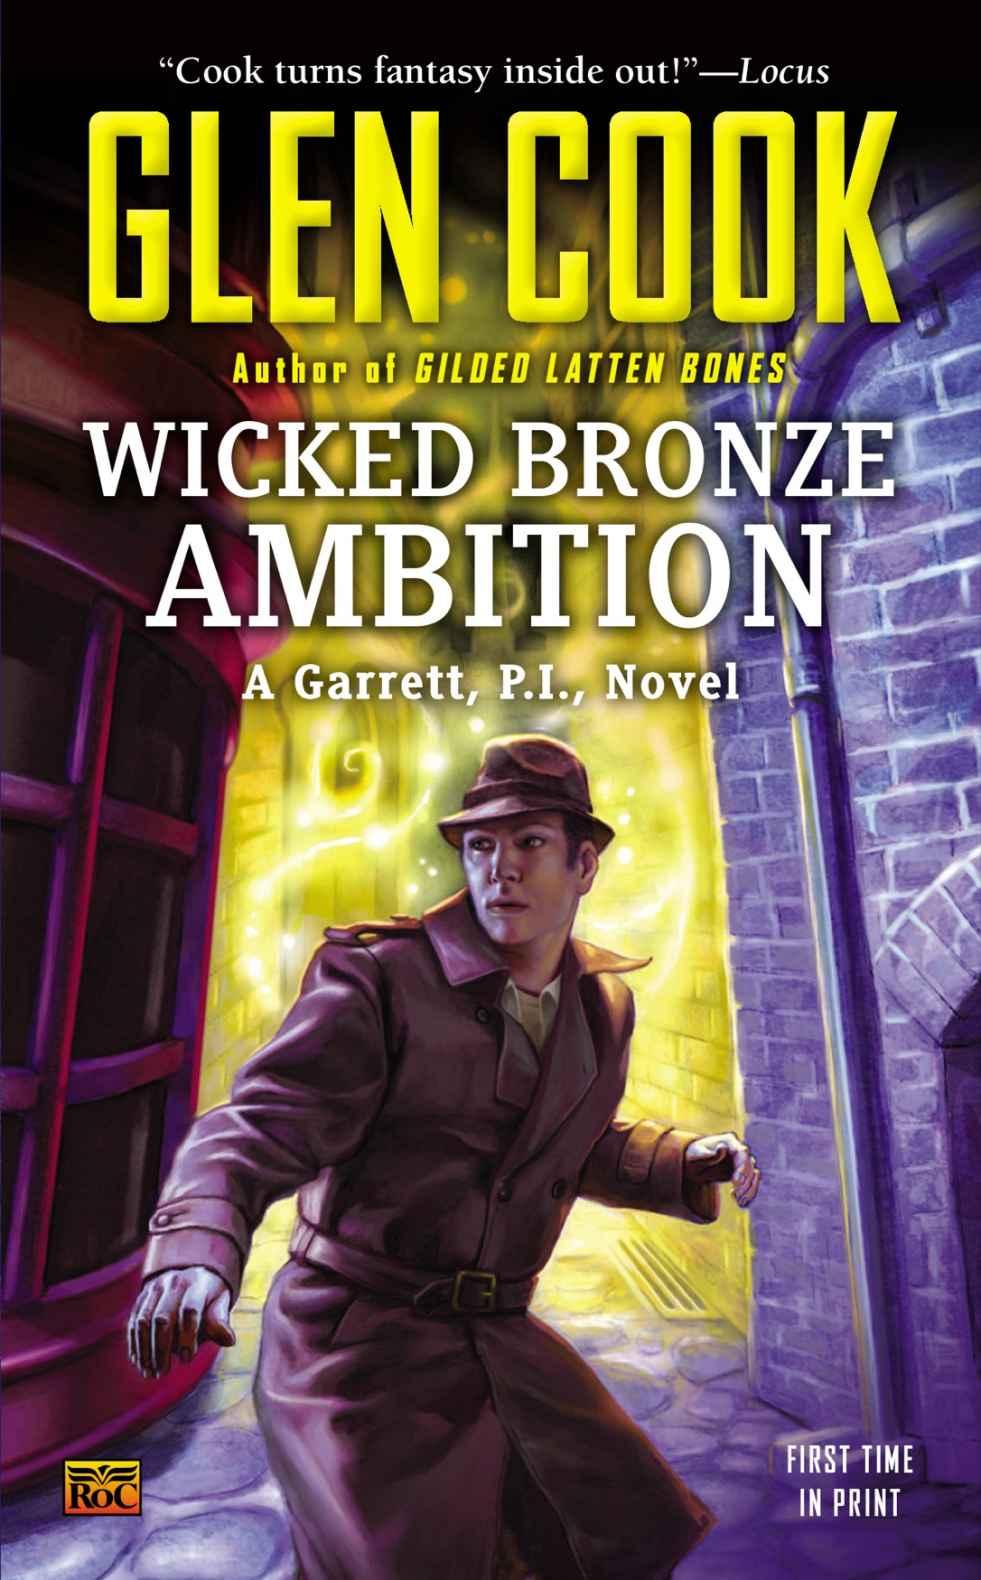 Wicked Bronze Ambition: A Garrett, P.I., Novel by Glen Cook